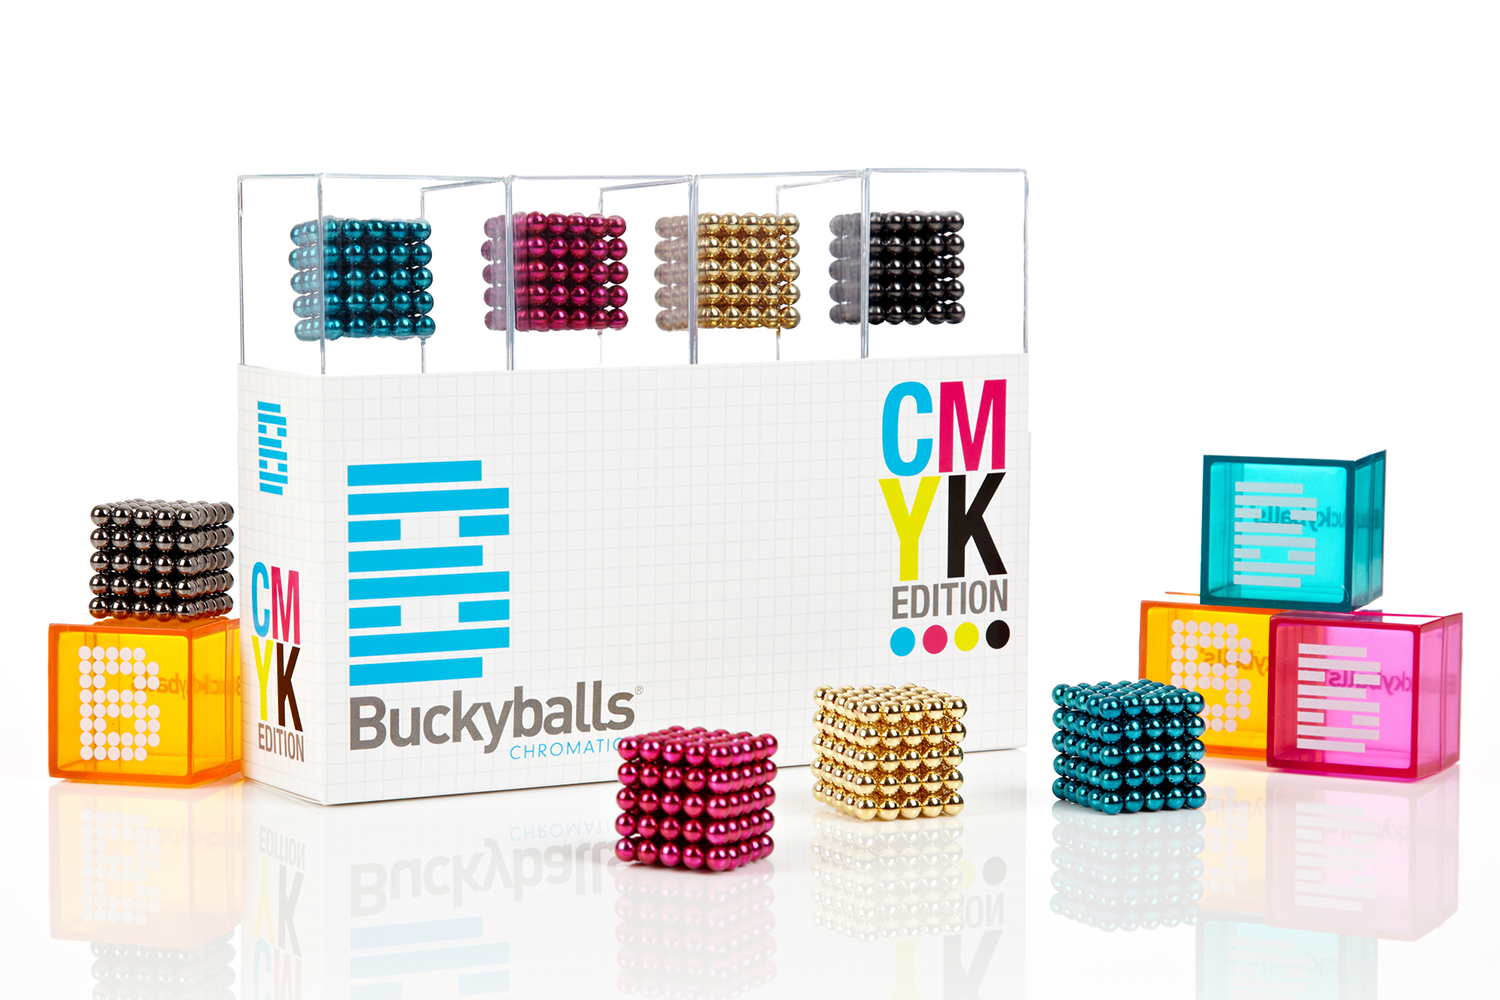 Buckyballs Product Development & Packaging